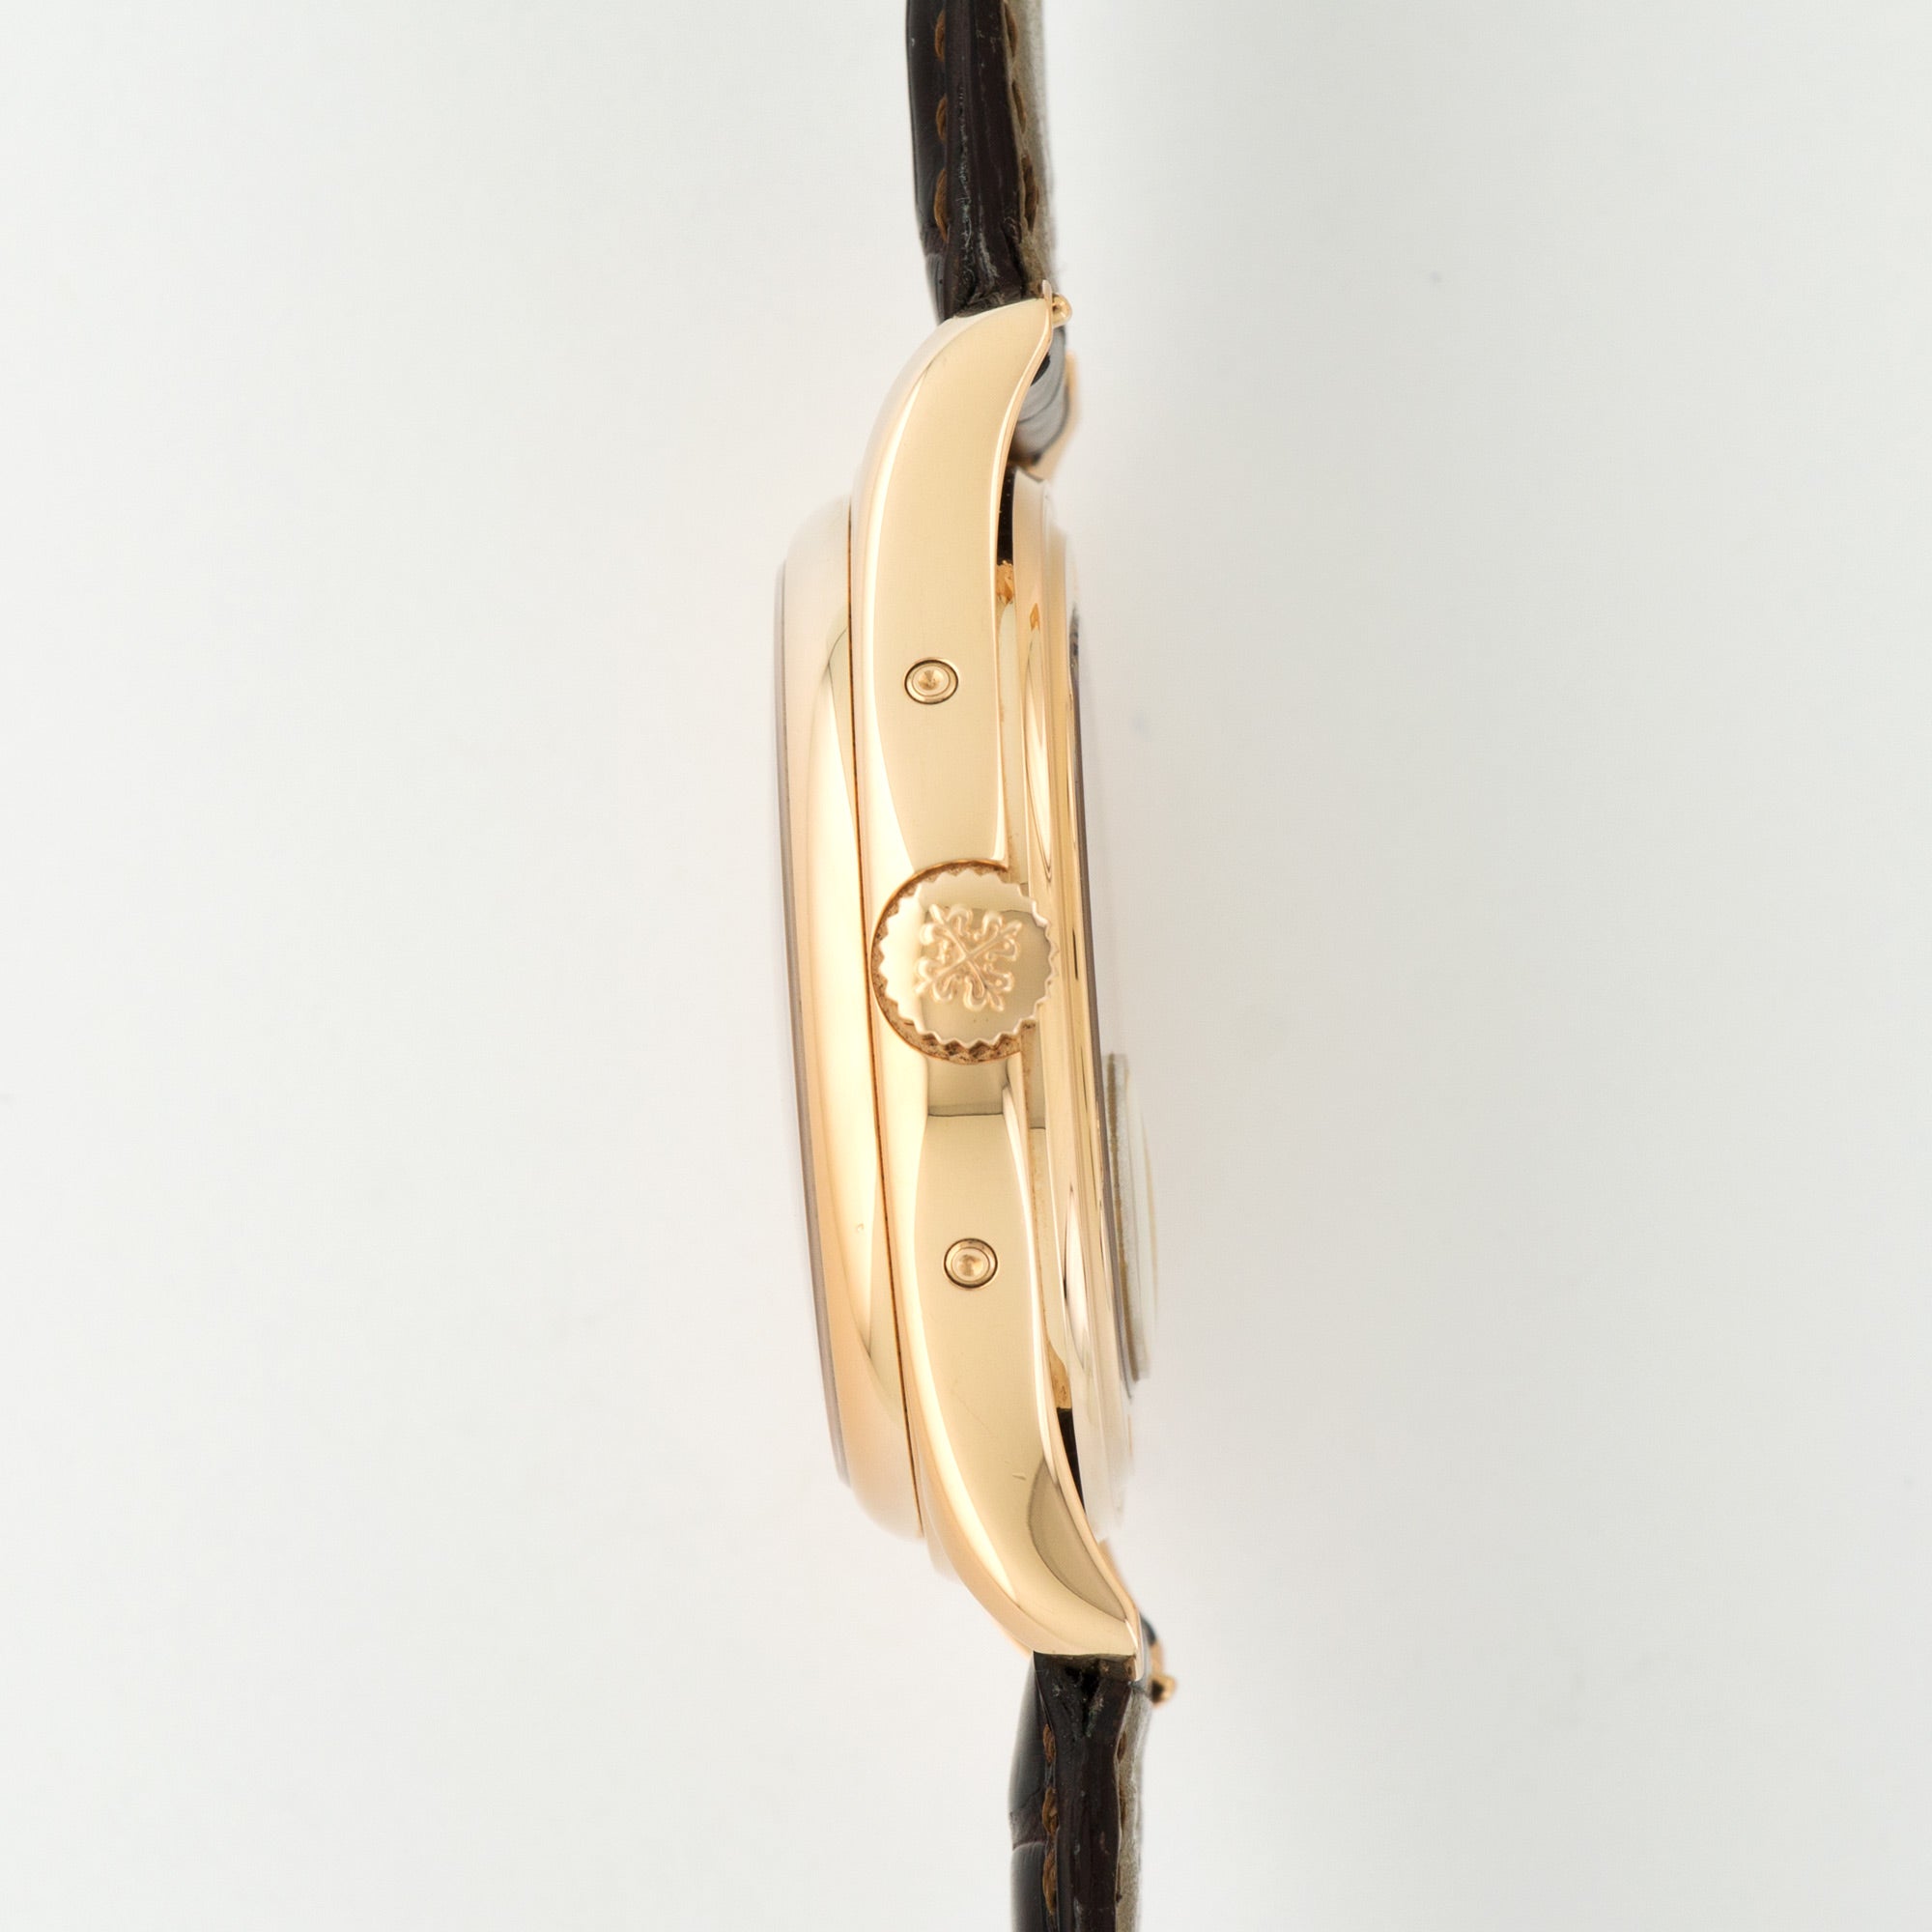 Patek Philippe - Patek Philippe Rose Gold Annual Calendar Advanced Research Ref. 5350R - The Keystone Watches